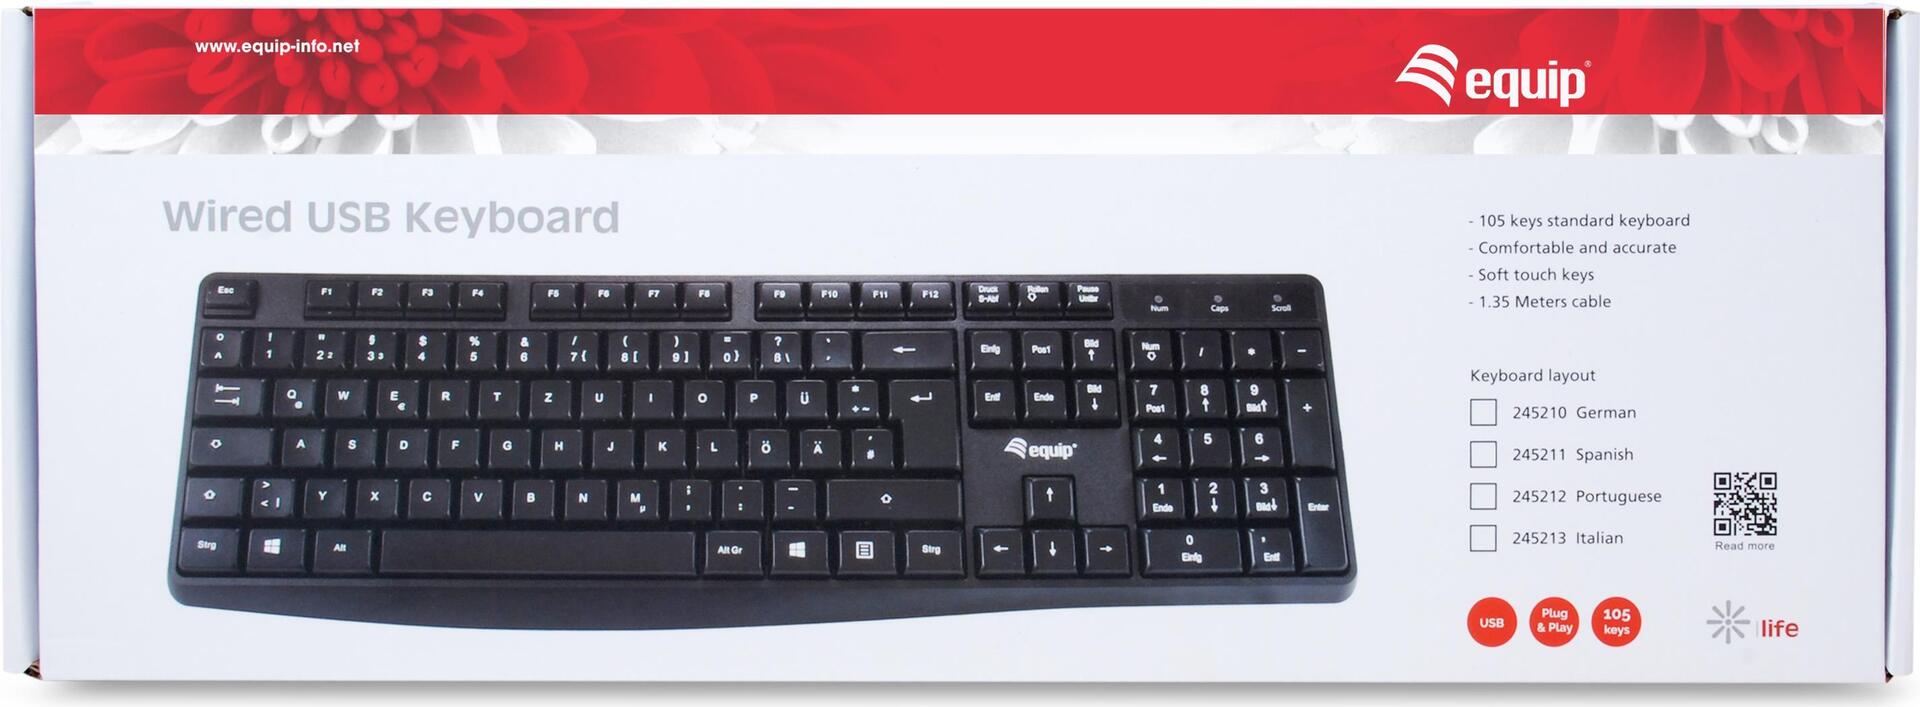 Equip Kabelgebundene USB Tastatur (245210)